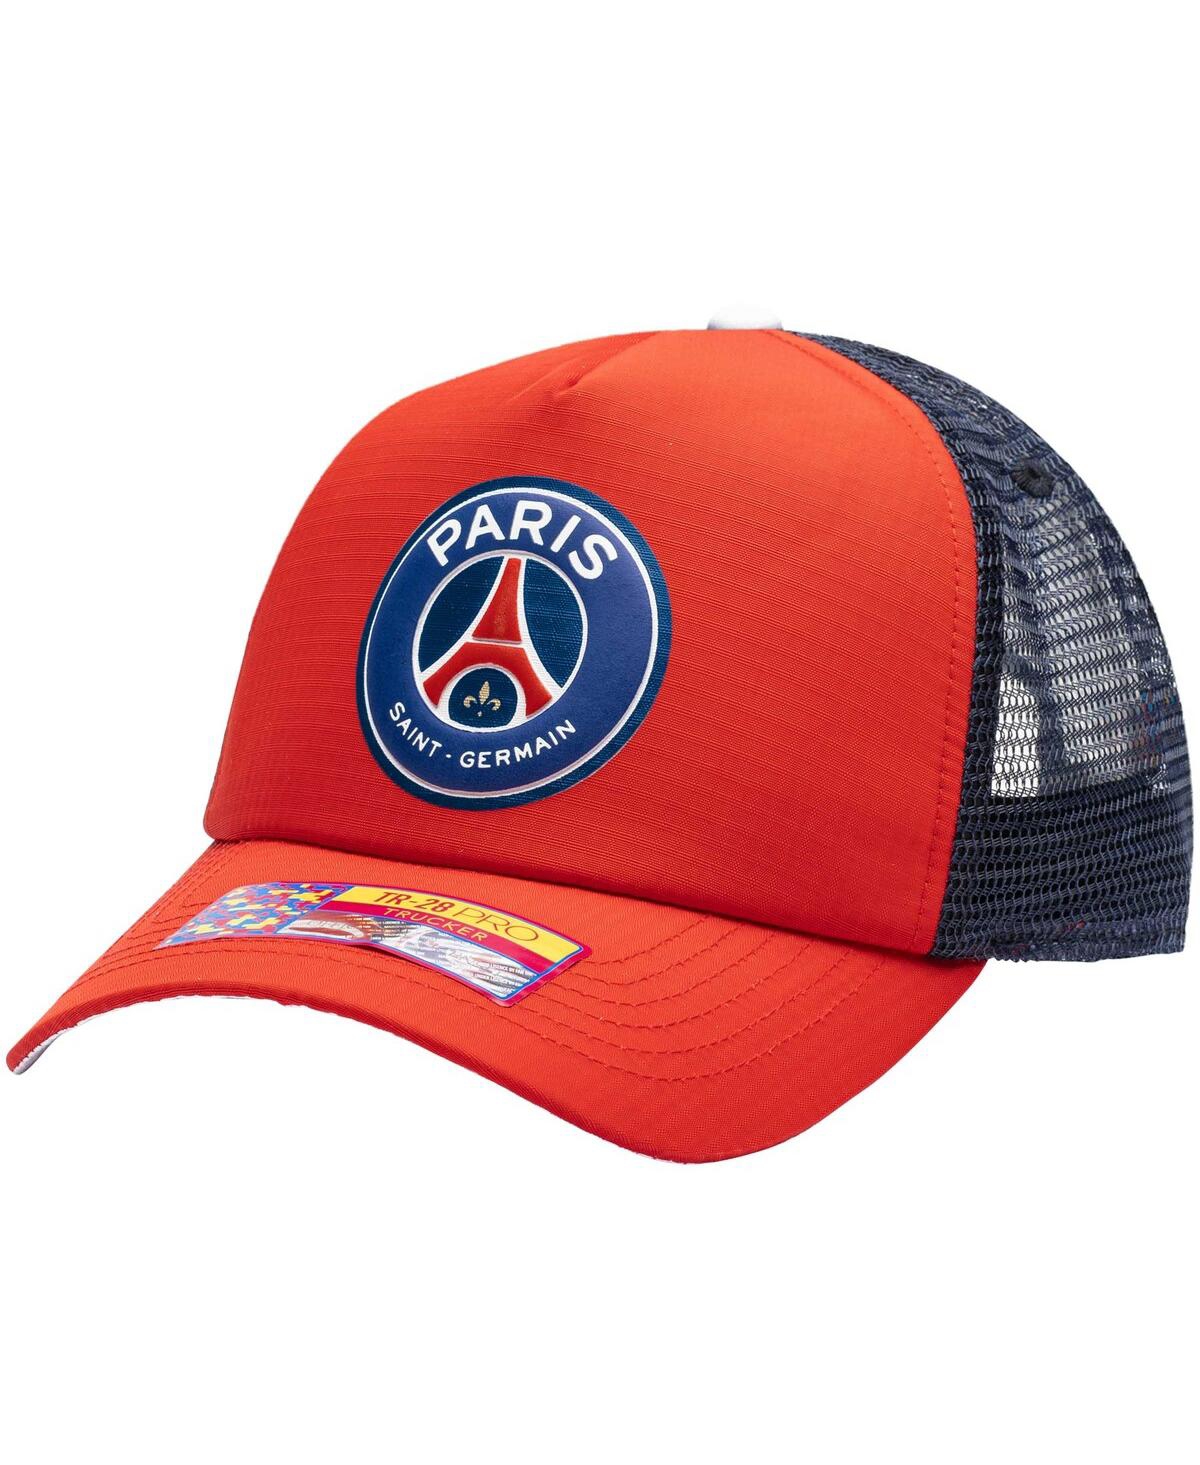 Men's Red Paris Saint-Germain Trucker Adjustable Hat - Red